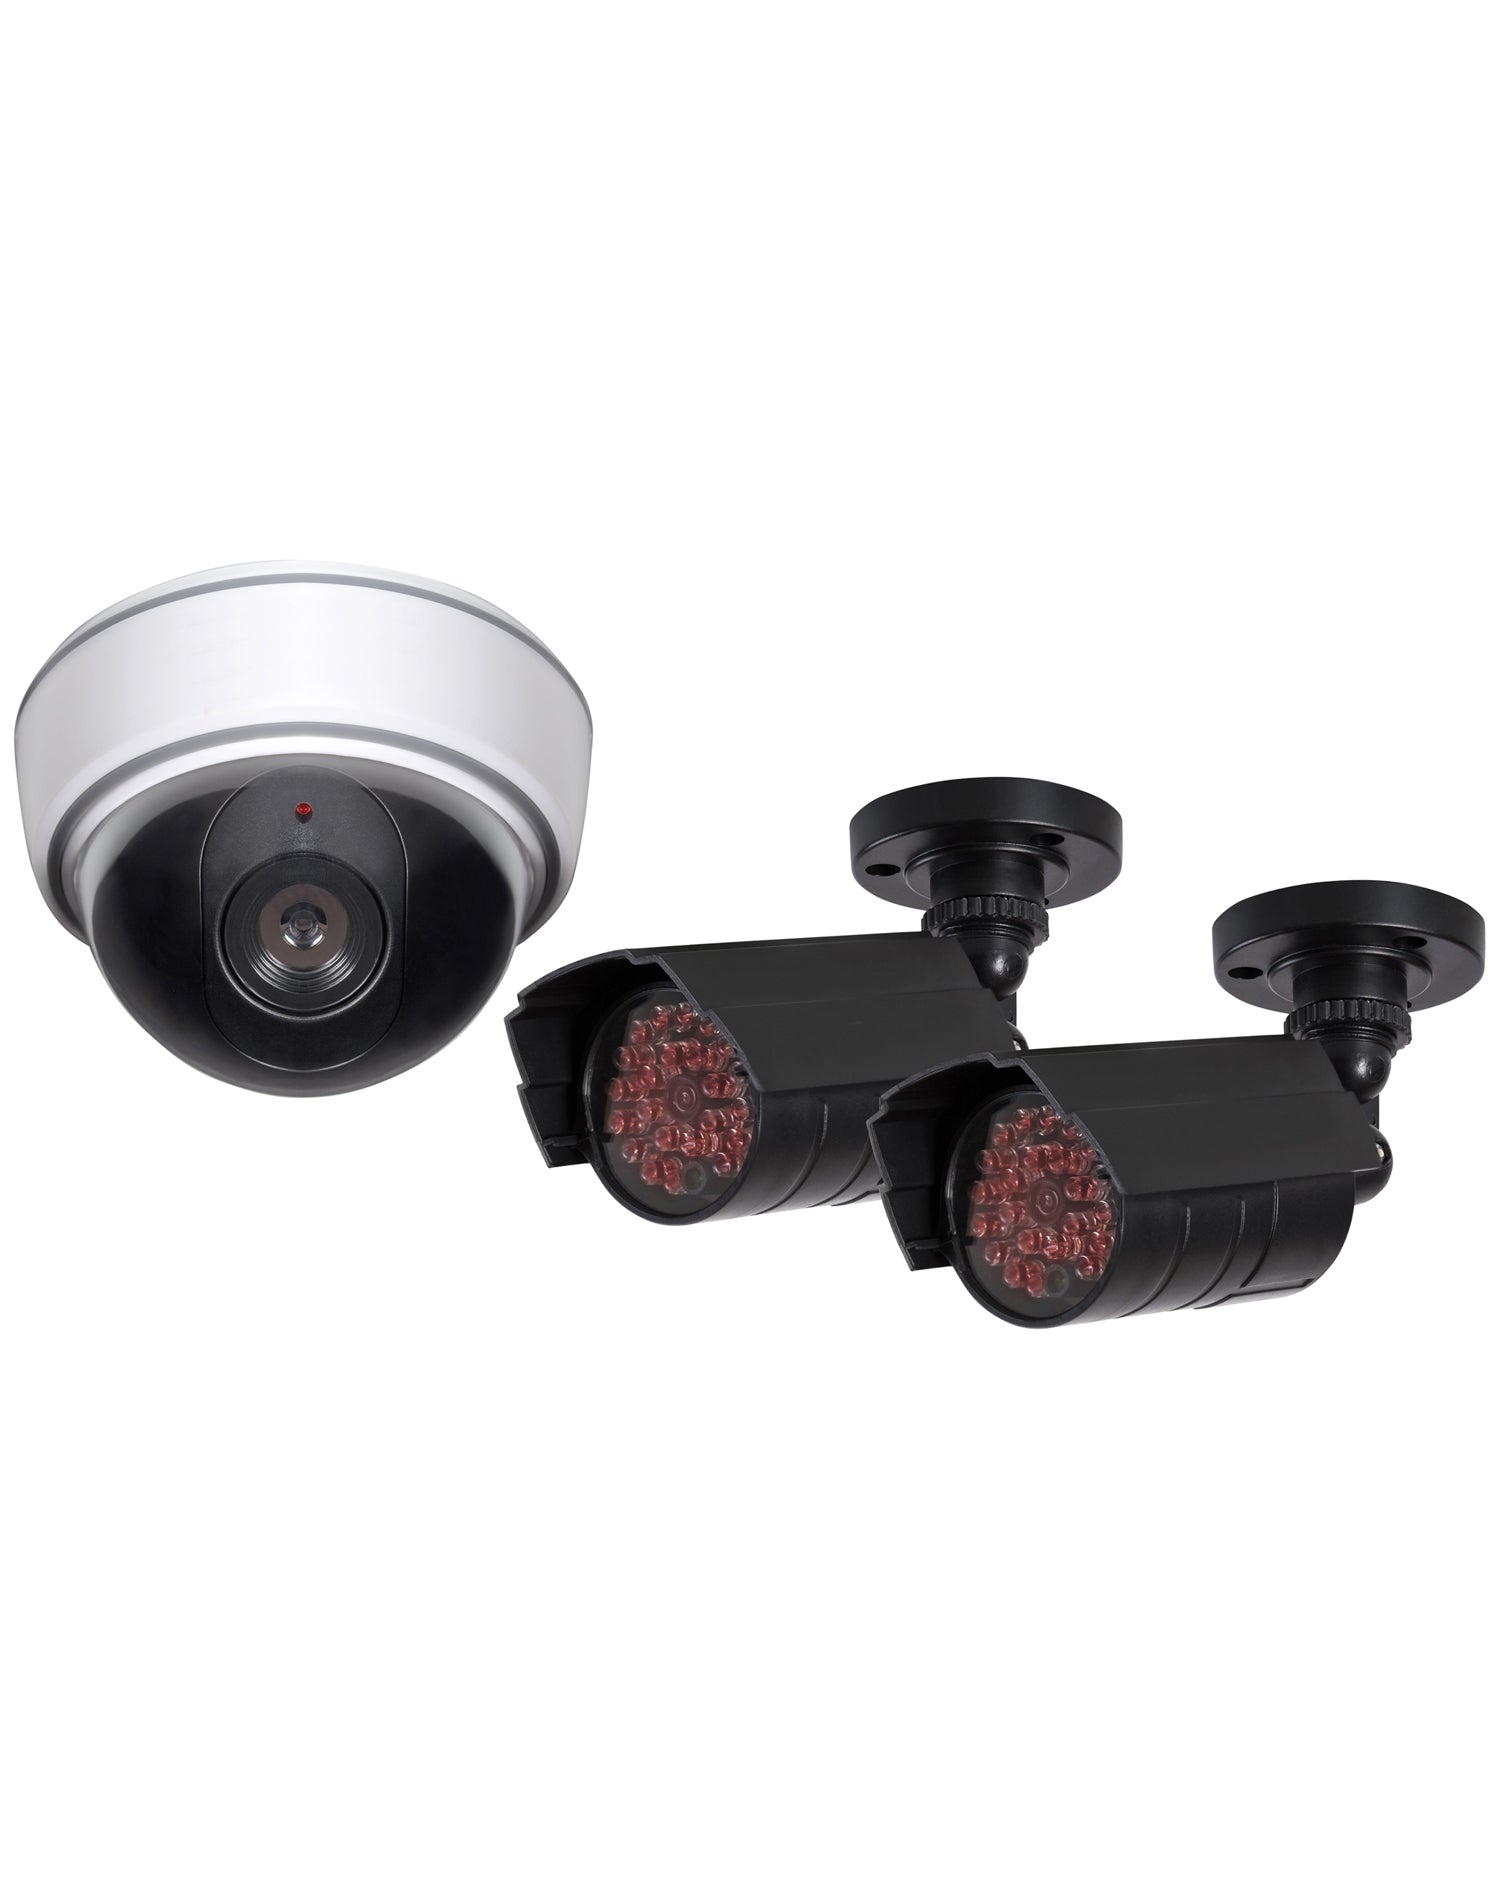 ProperAV Imitation Dummy Security Camera Kit including 1 x Dome and 2 x Camera’s